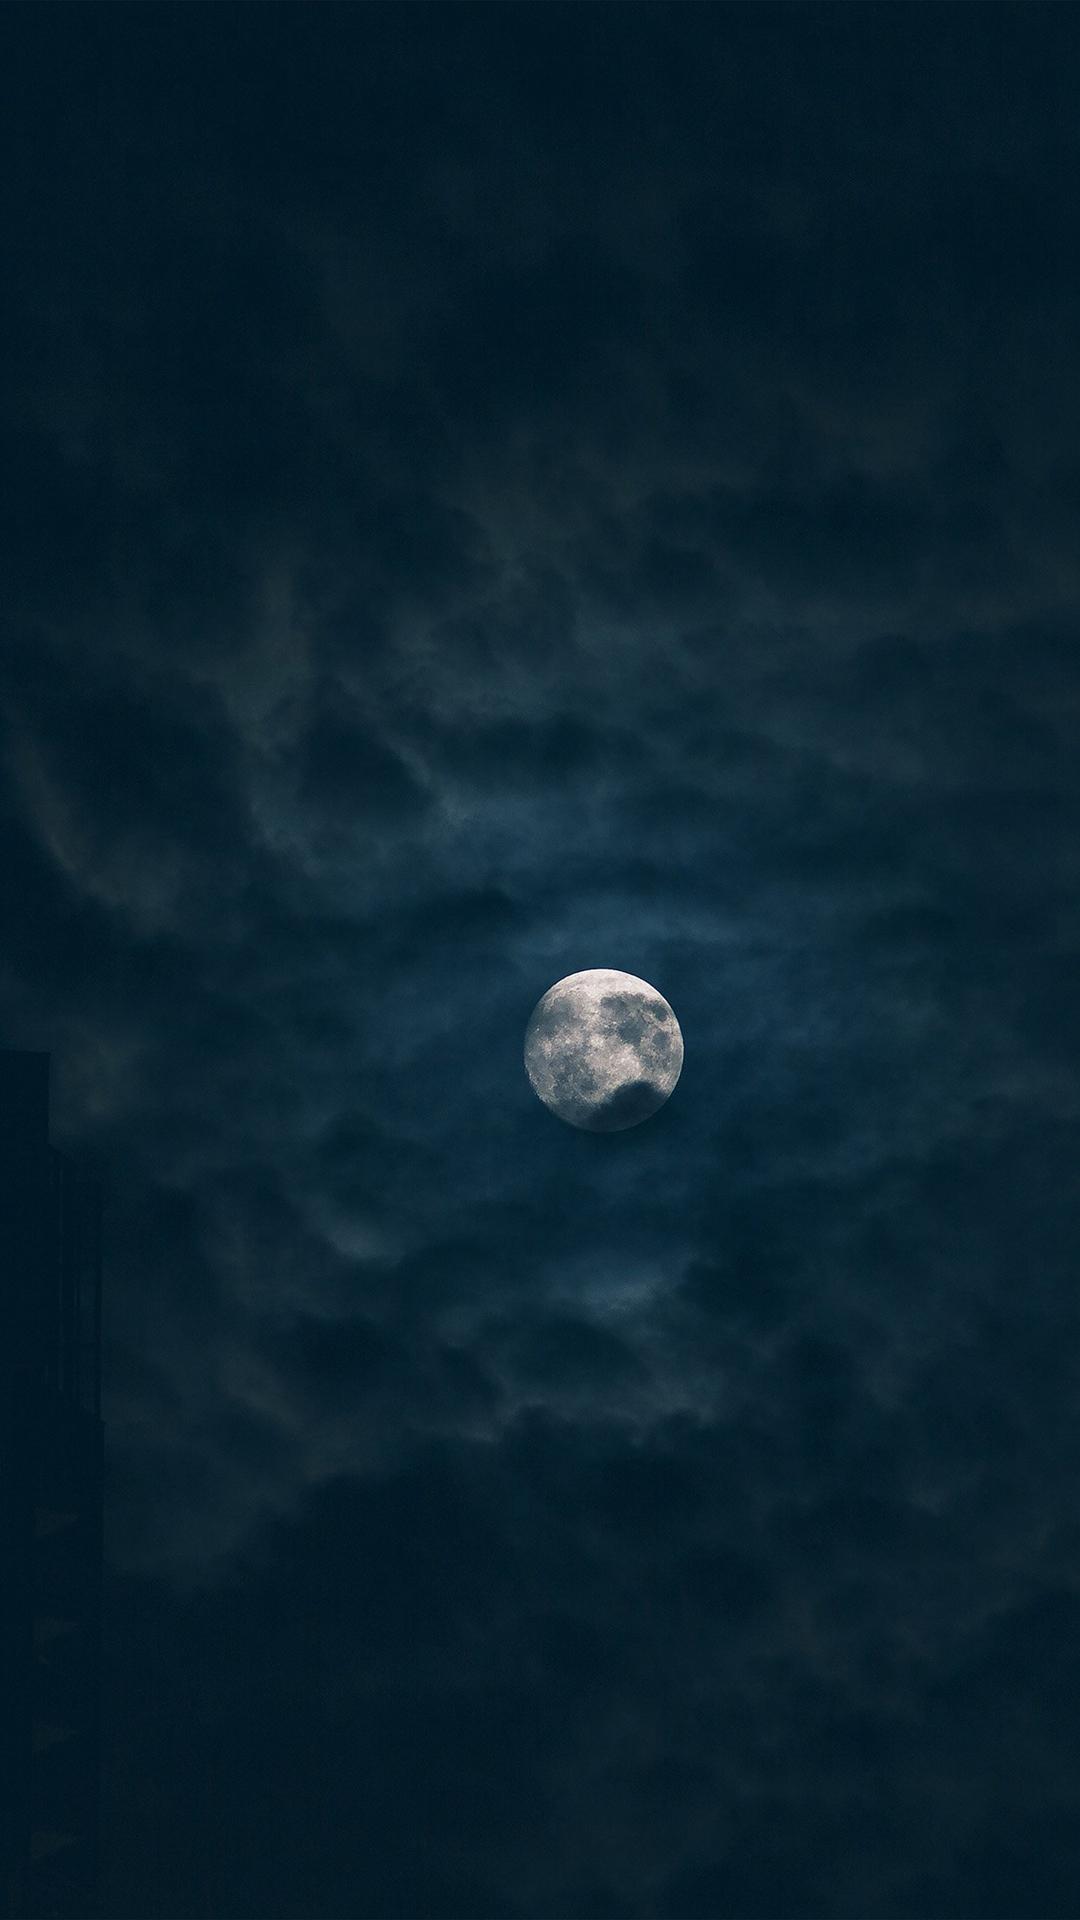 Moon Sky Dark Night Nature iPhone 8 Wallpaper Free Download